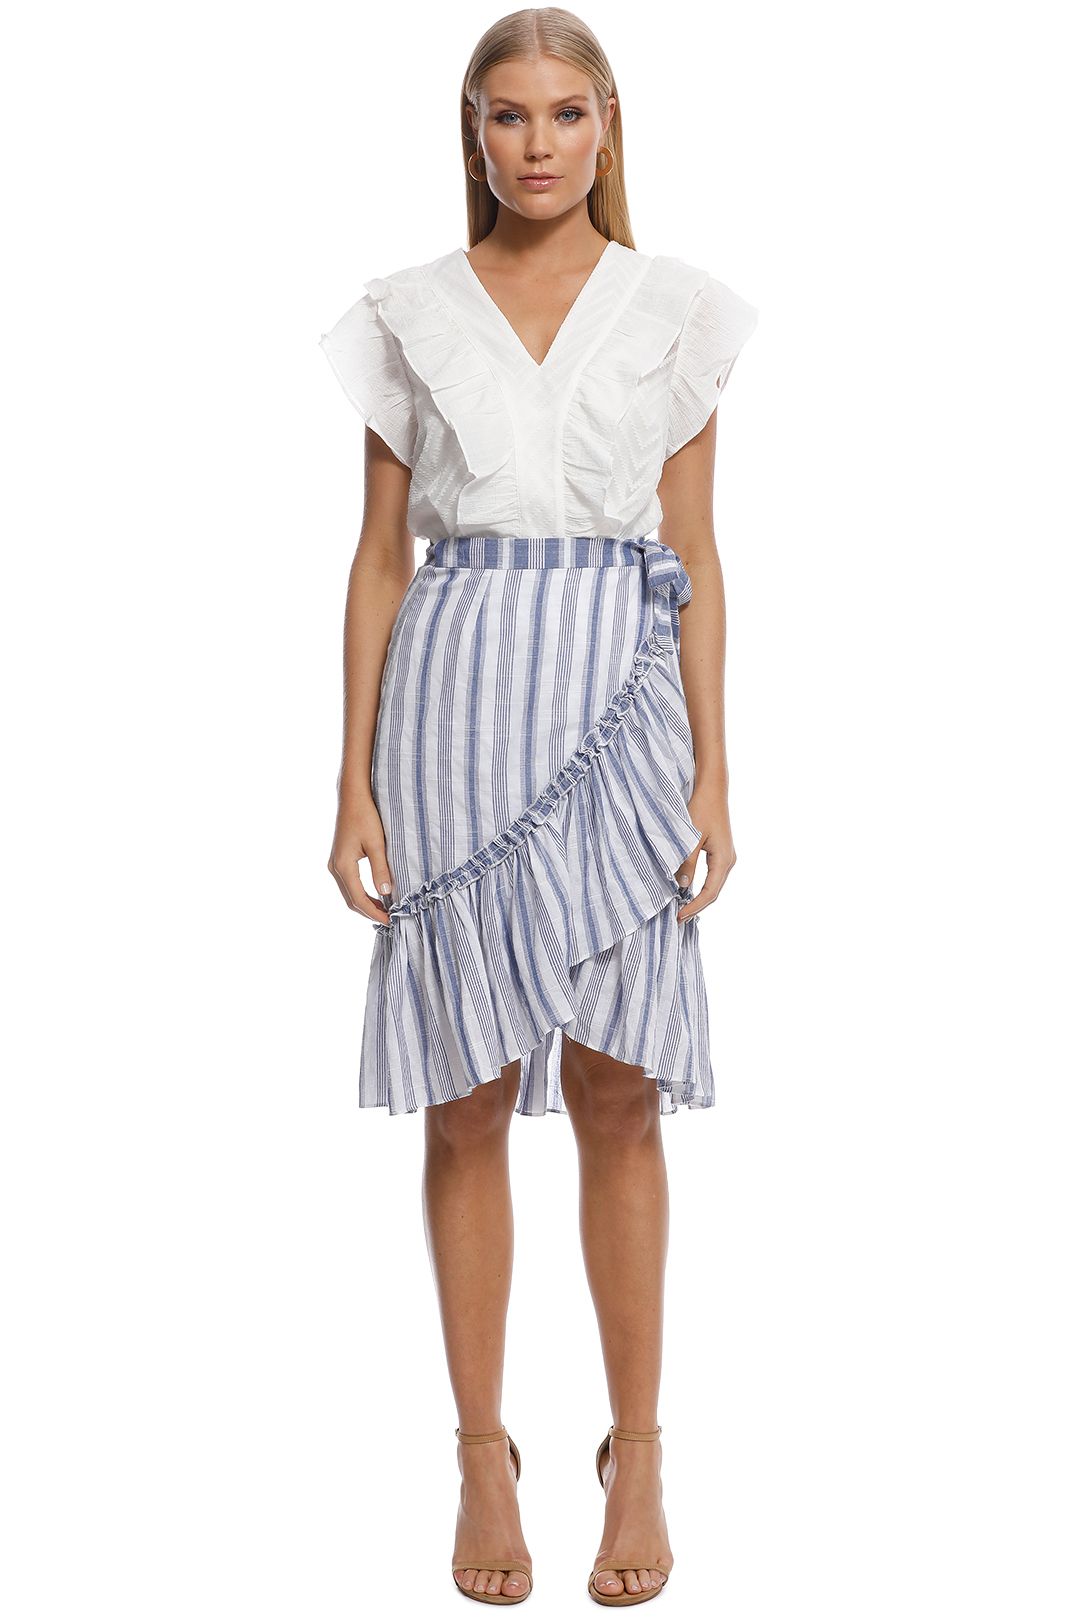 Suboo - Wrap Midi Skirt - Blue White Stripes - Front